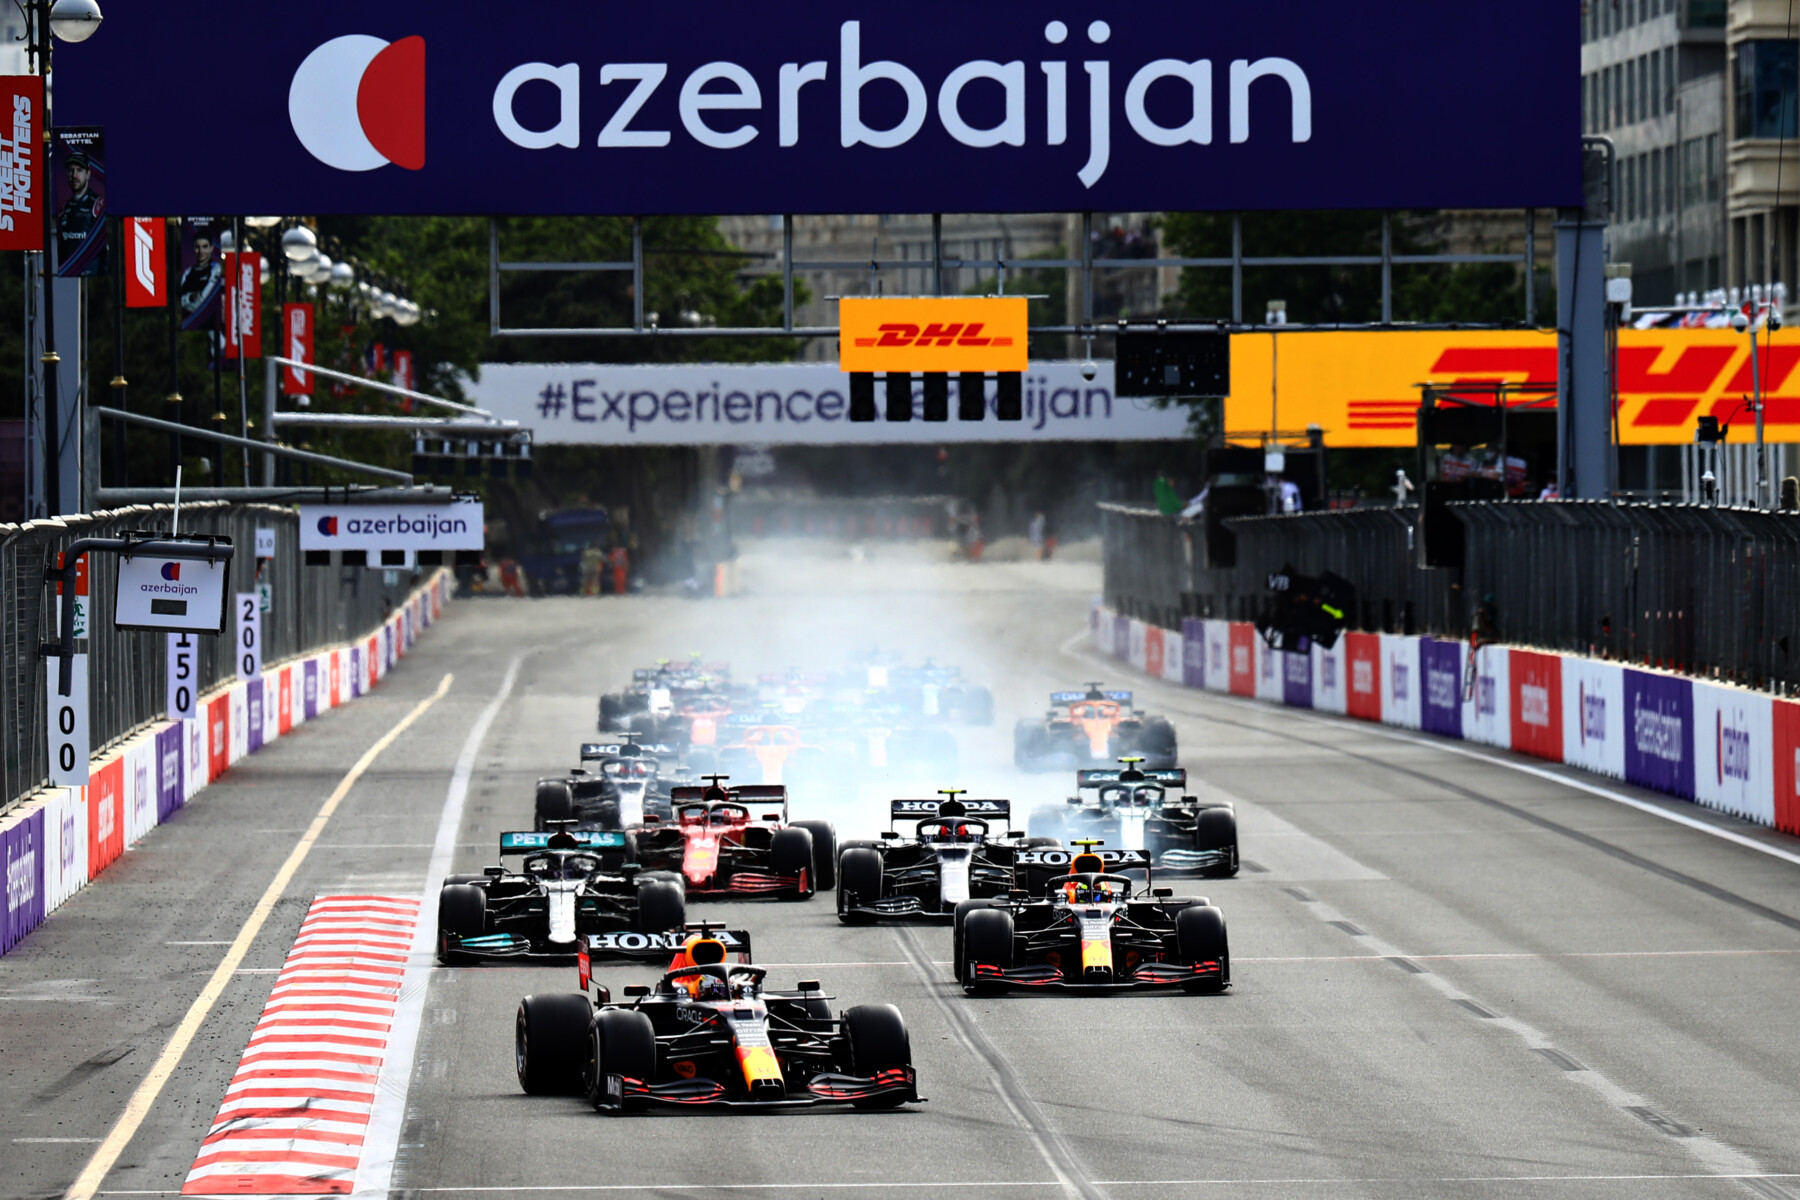 F1 Grand Prix of Azerbaijan START '84 Autosportmagazine